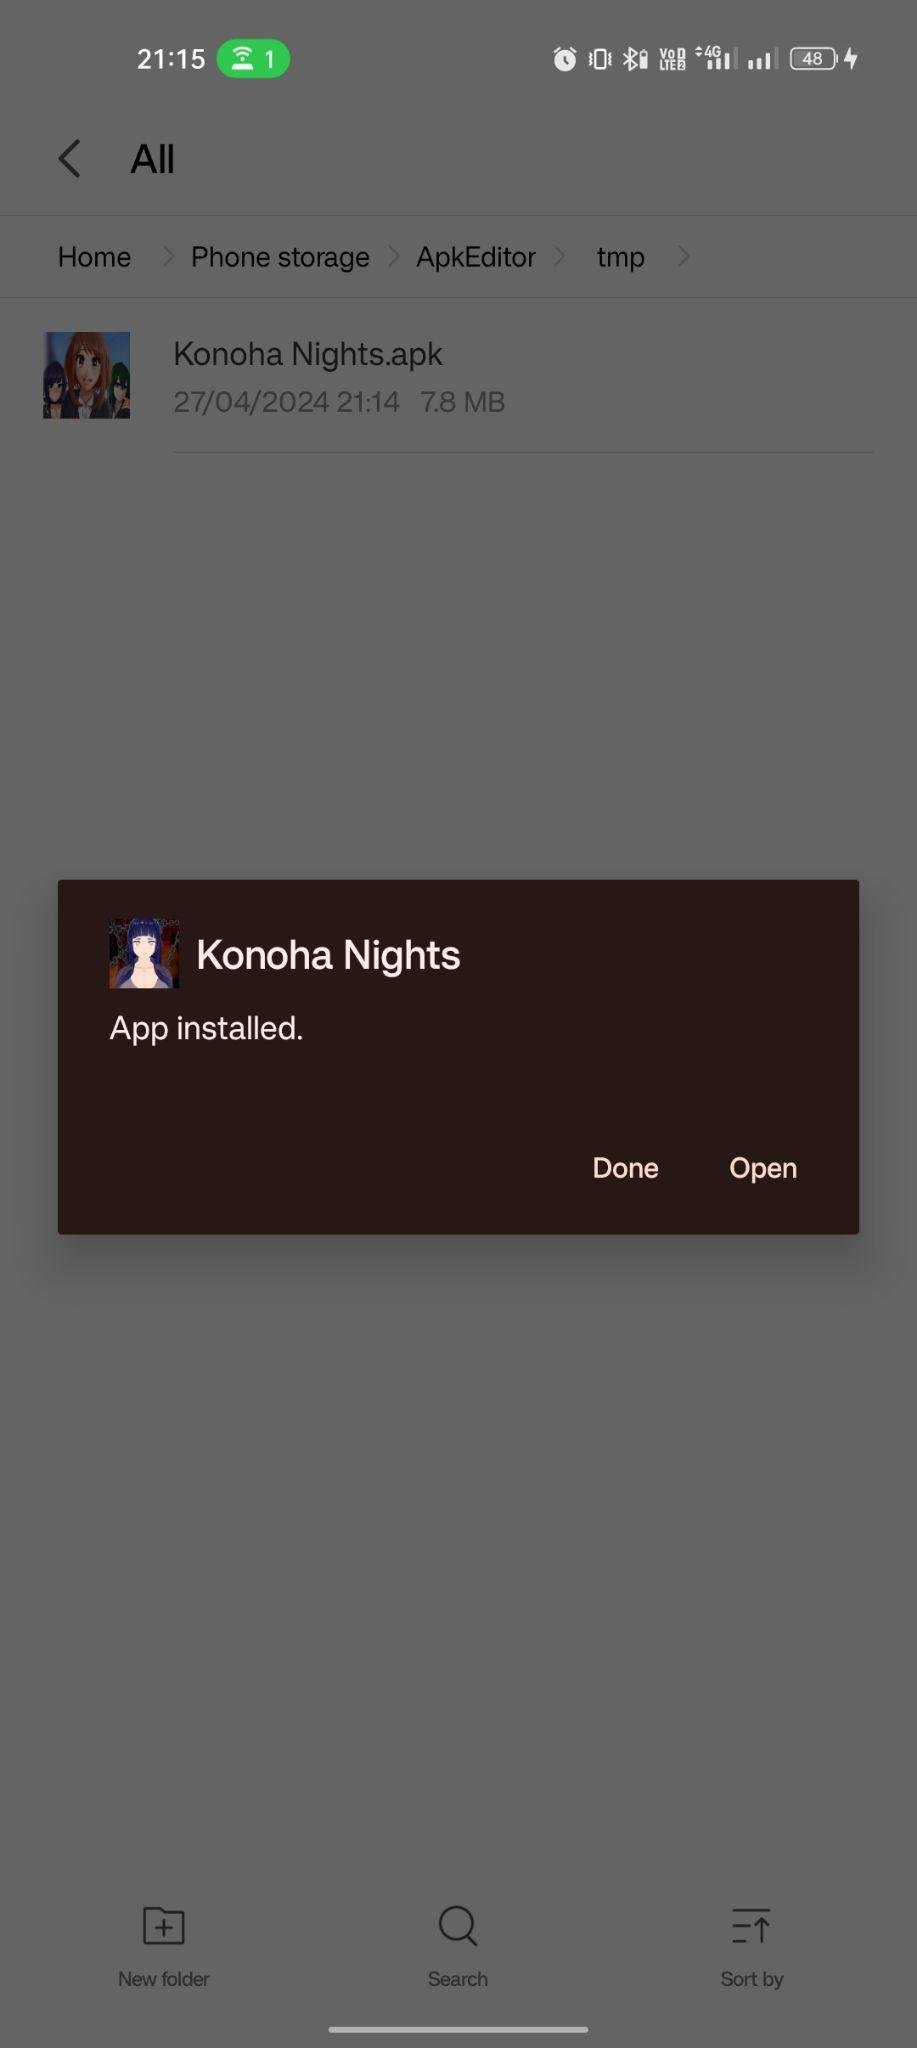 Konoha Nights apk installed